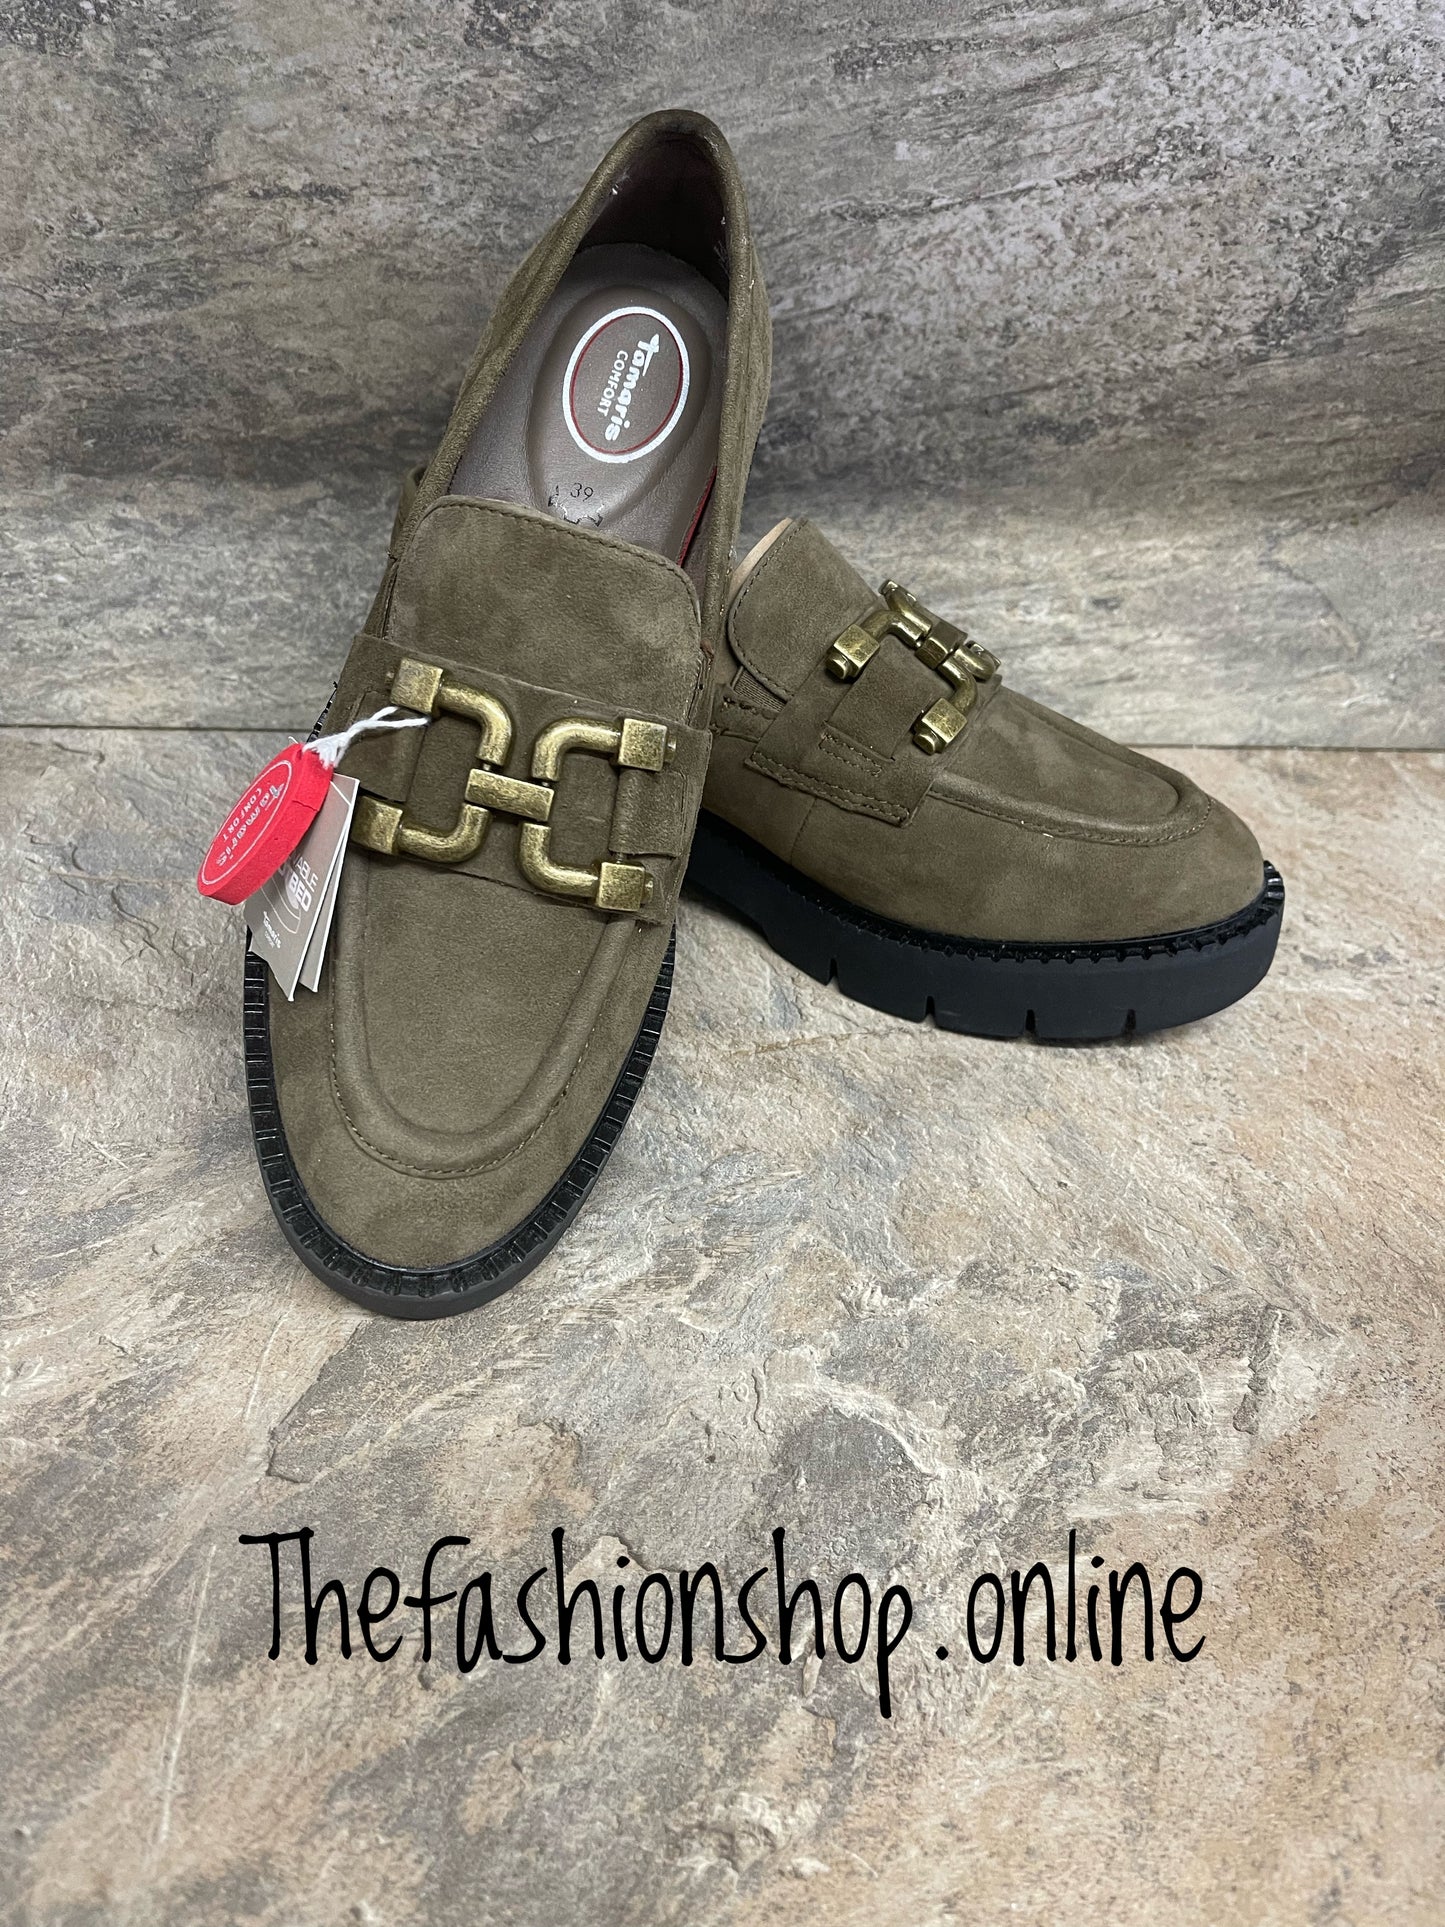 Tamaris mocha leather slip on buckle shoe sizes 4-9